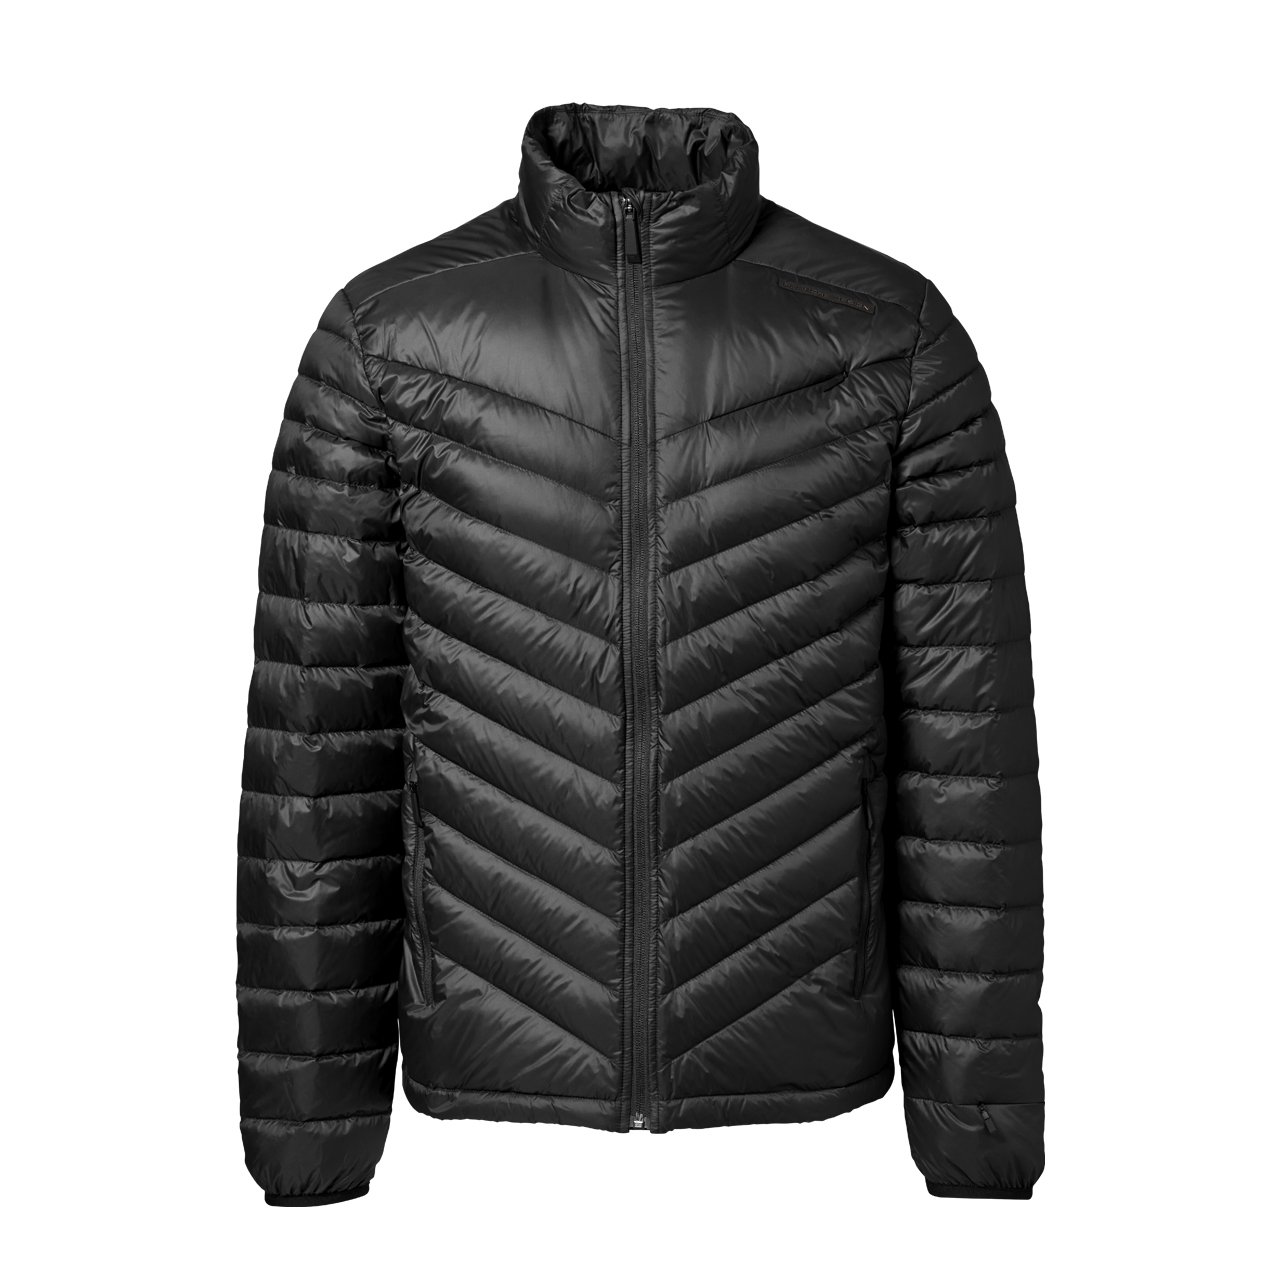 Buy Black Shower Resistant Lightweight Puffer Jacket from Next USA